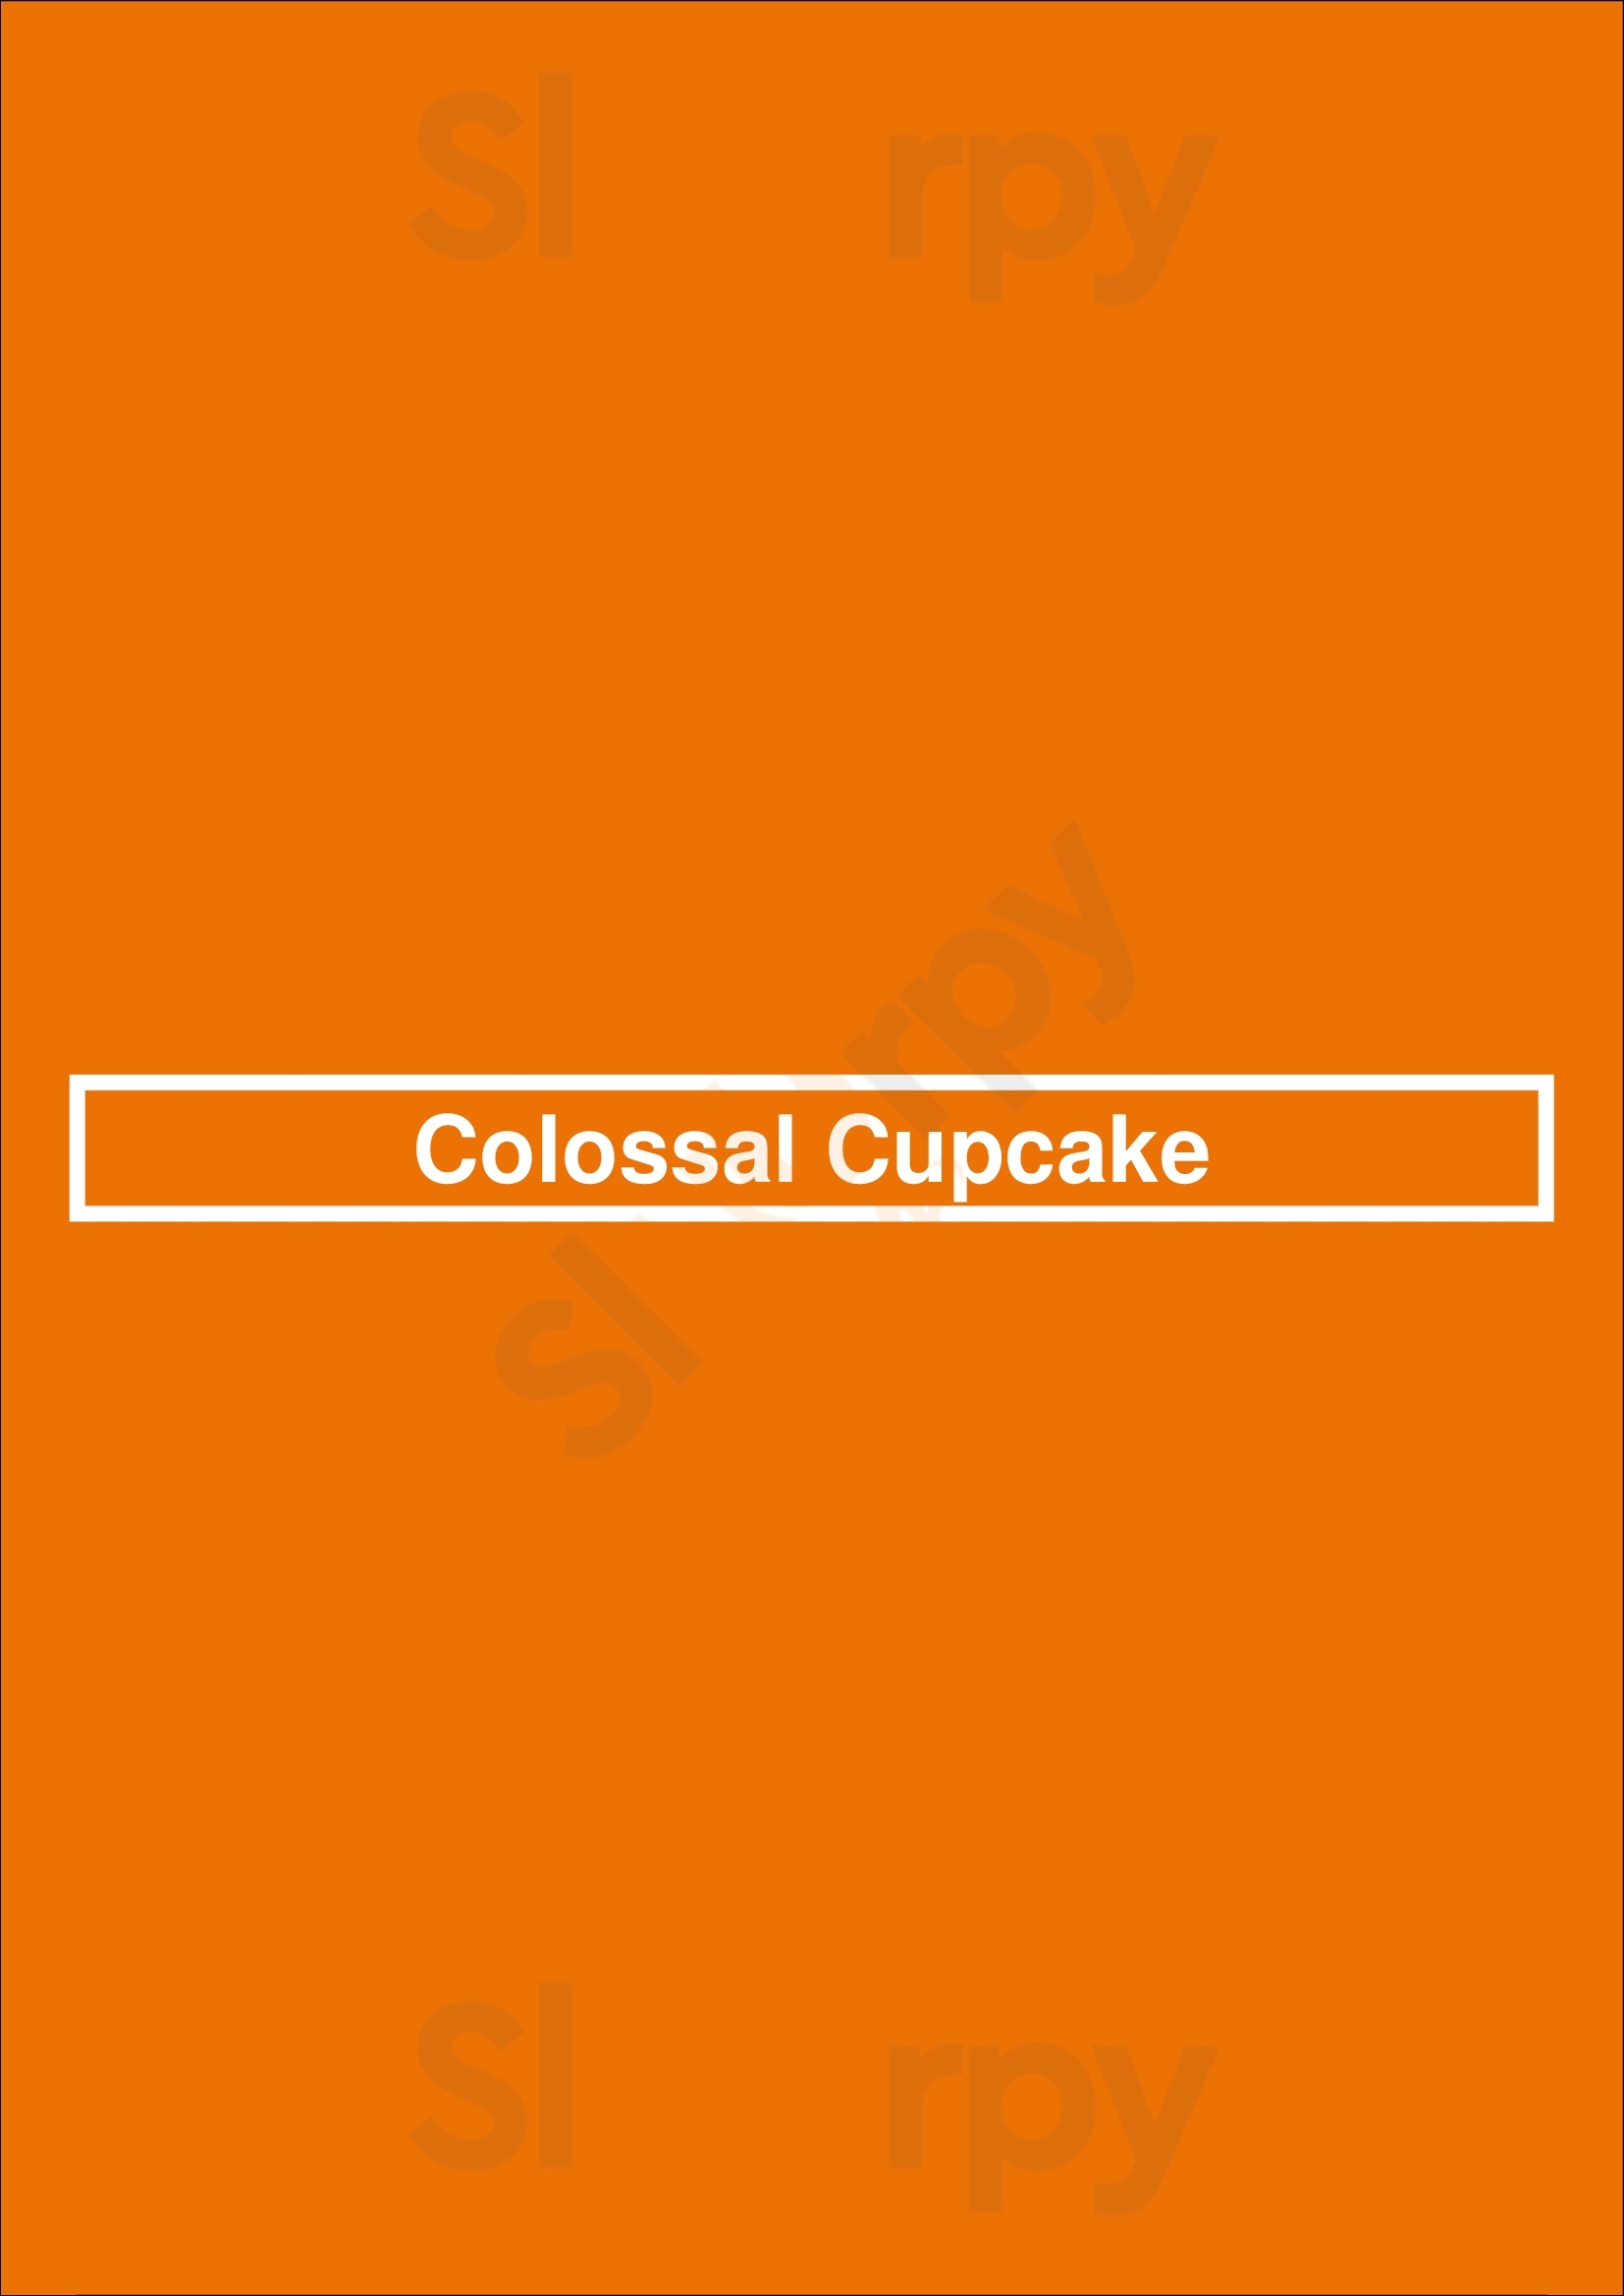 Colossal Cupcake Cleveland Menu - 1